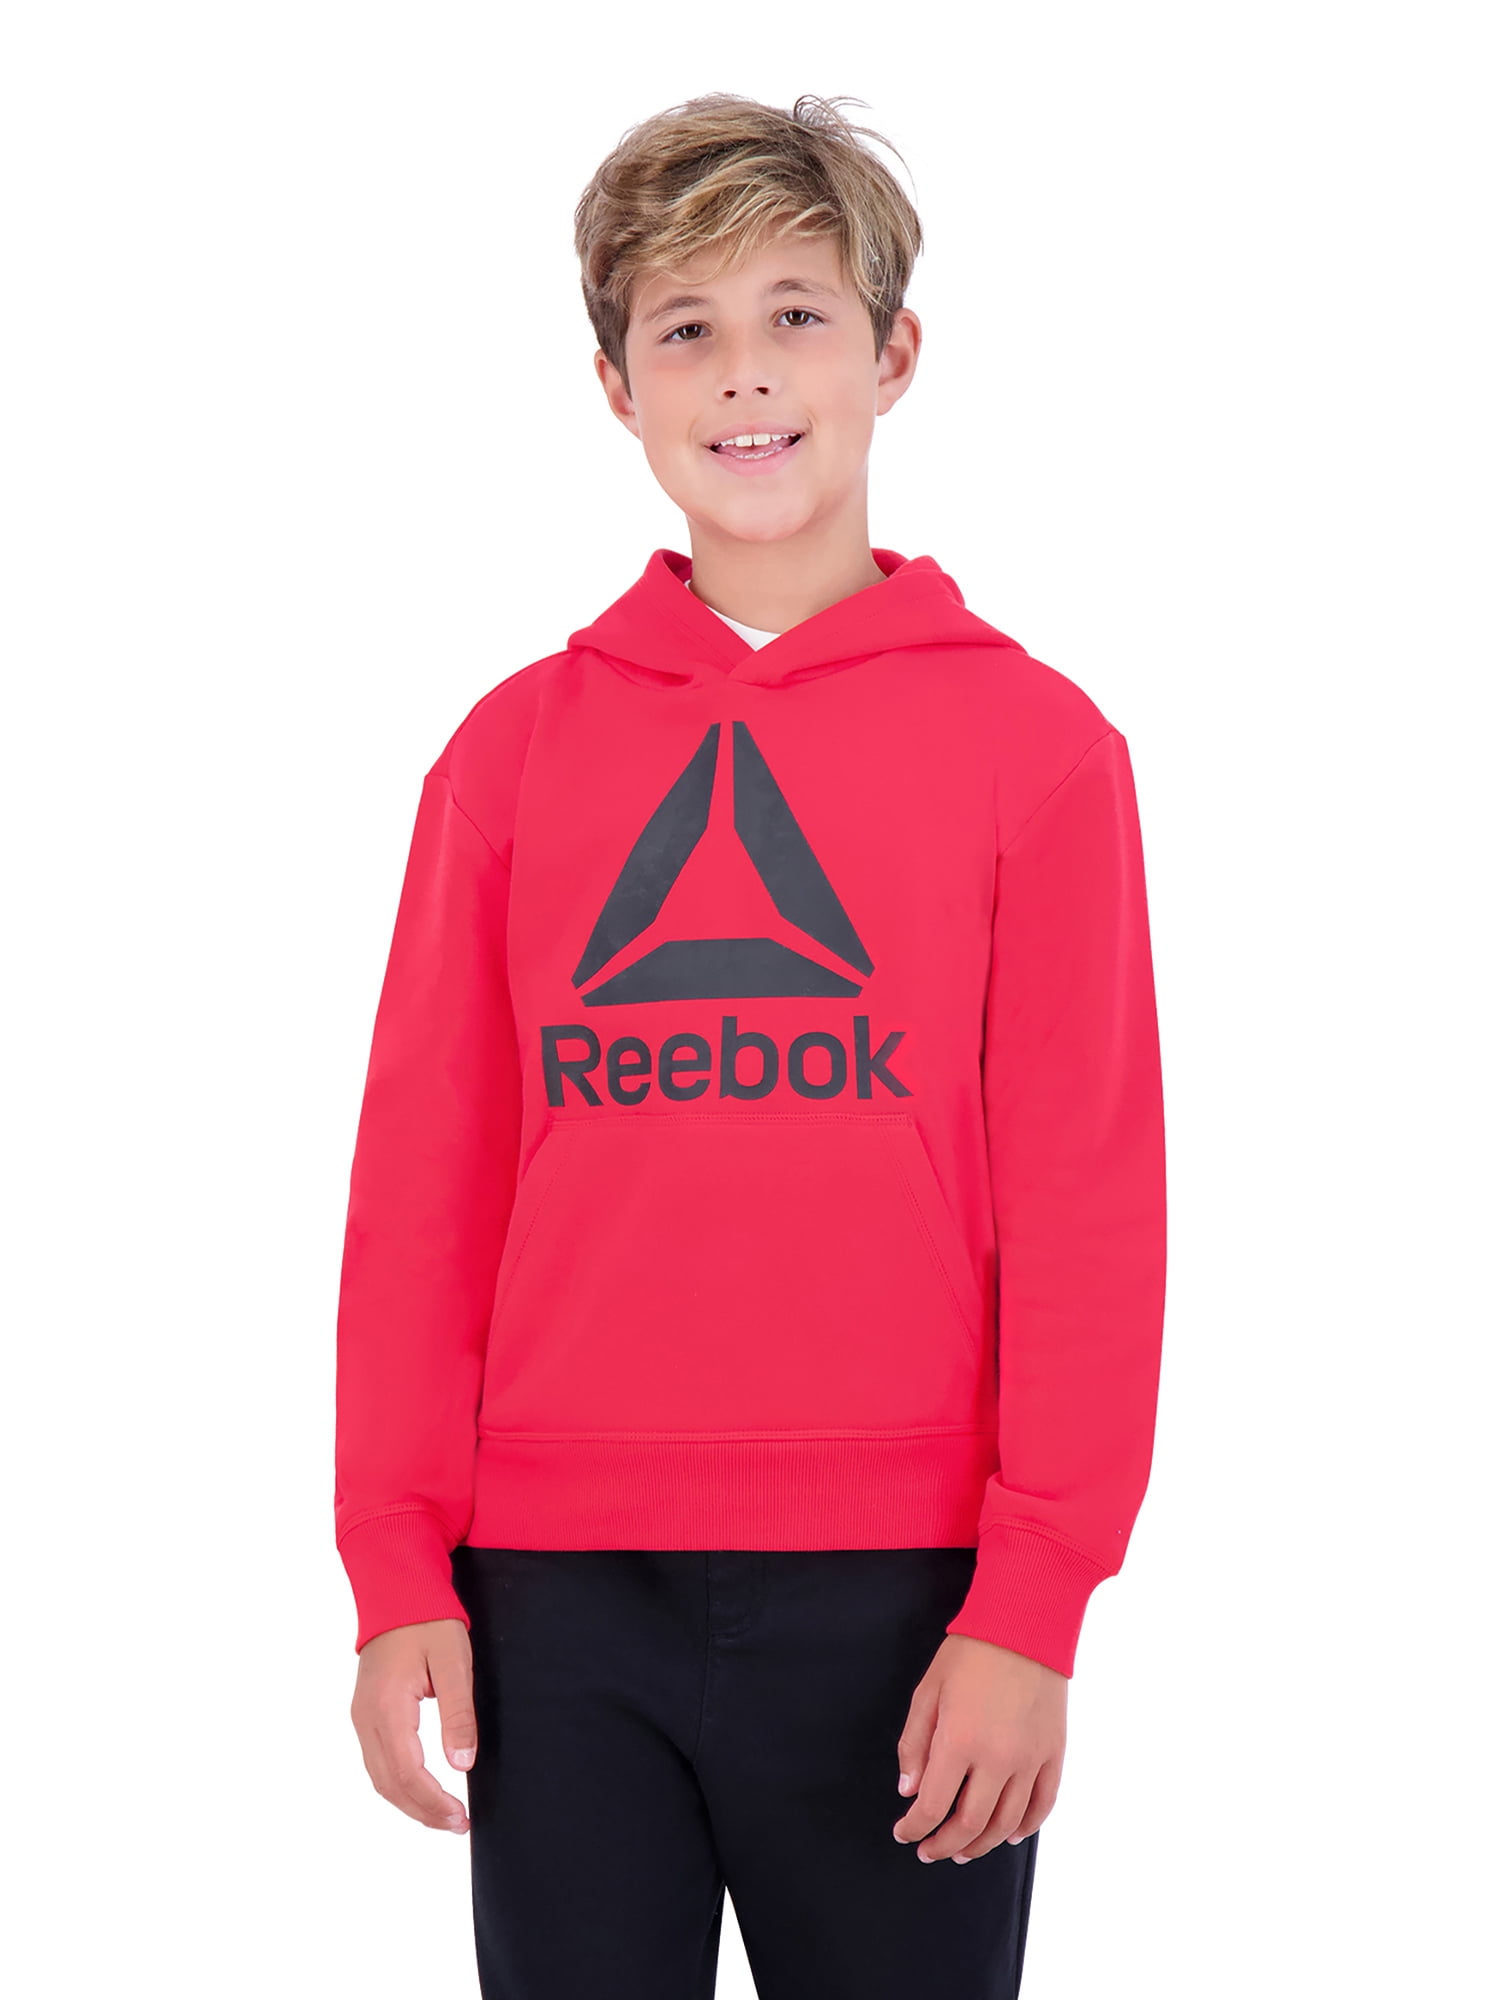 Reebok Unisex Kids’ Delta Fleece Hoodie, Sizes 4-18 - Walmart.com